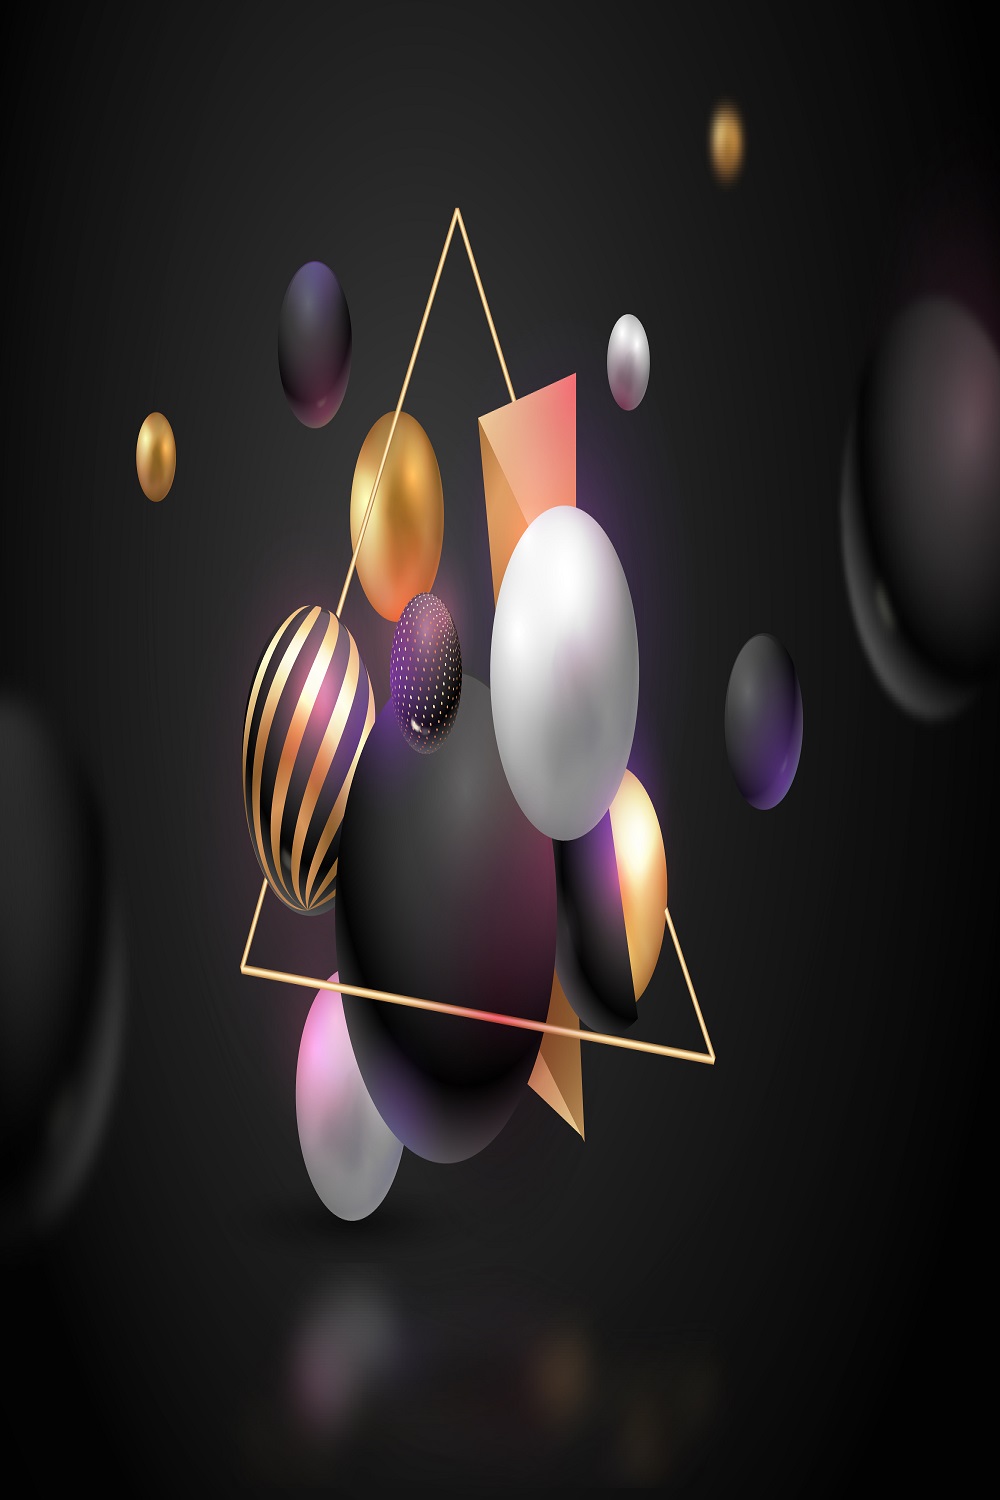 Metallic 3d spheres background pinterest preview image.